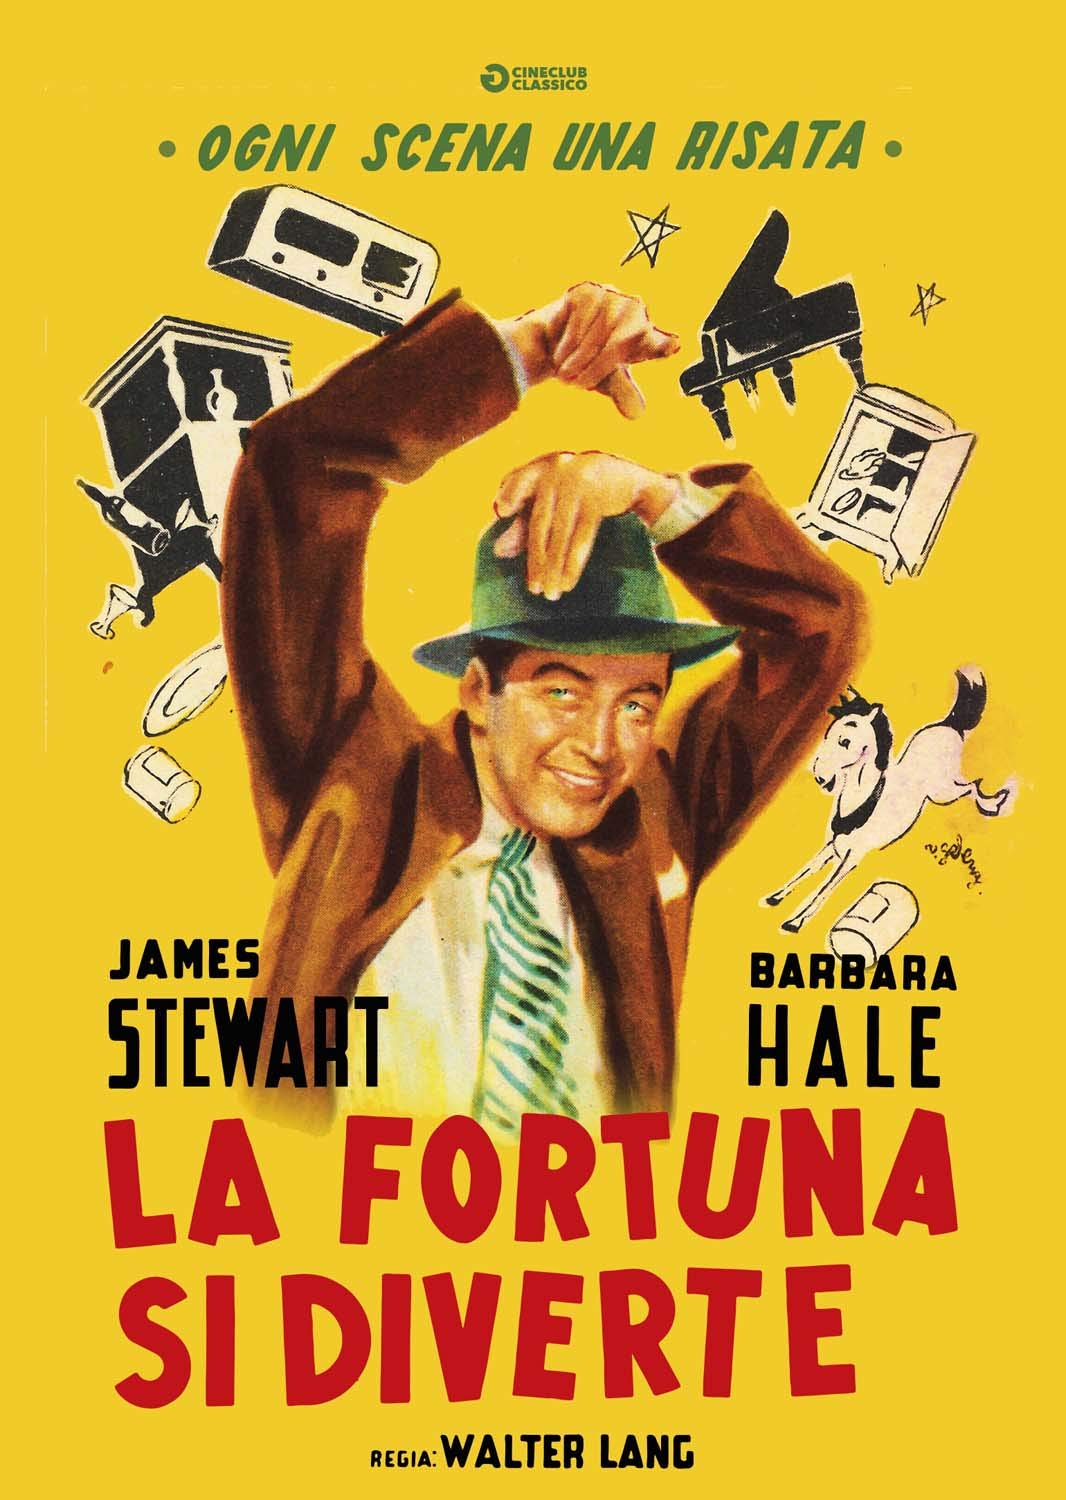 La fortuna si diverte [B/N] (1950)